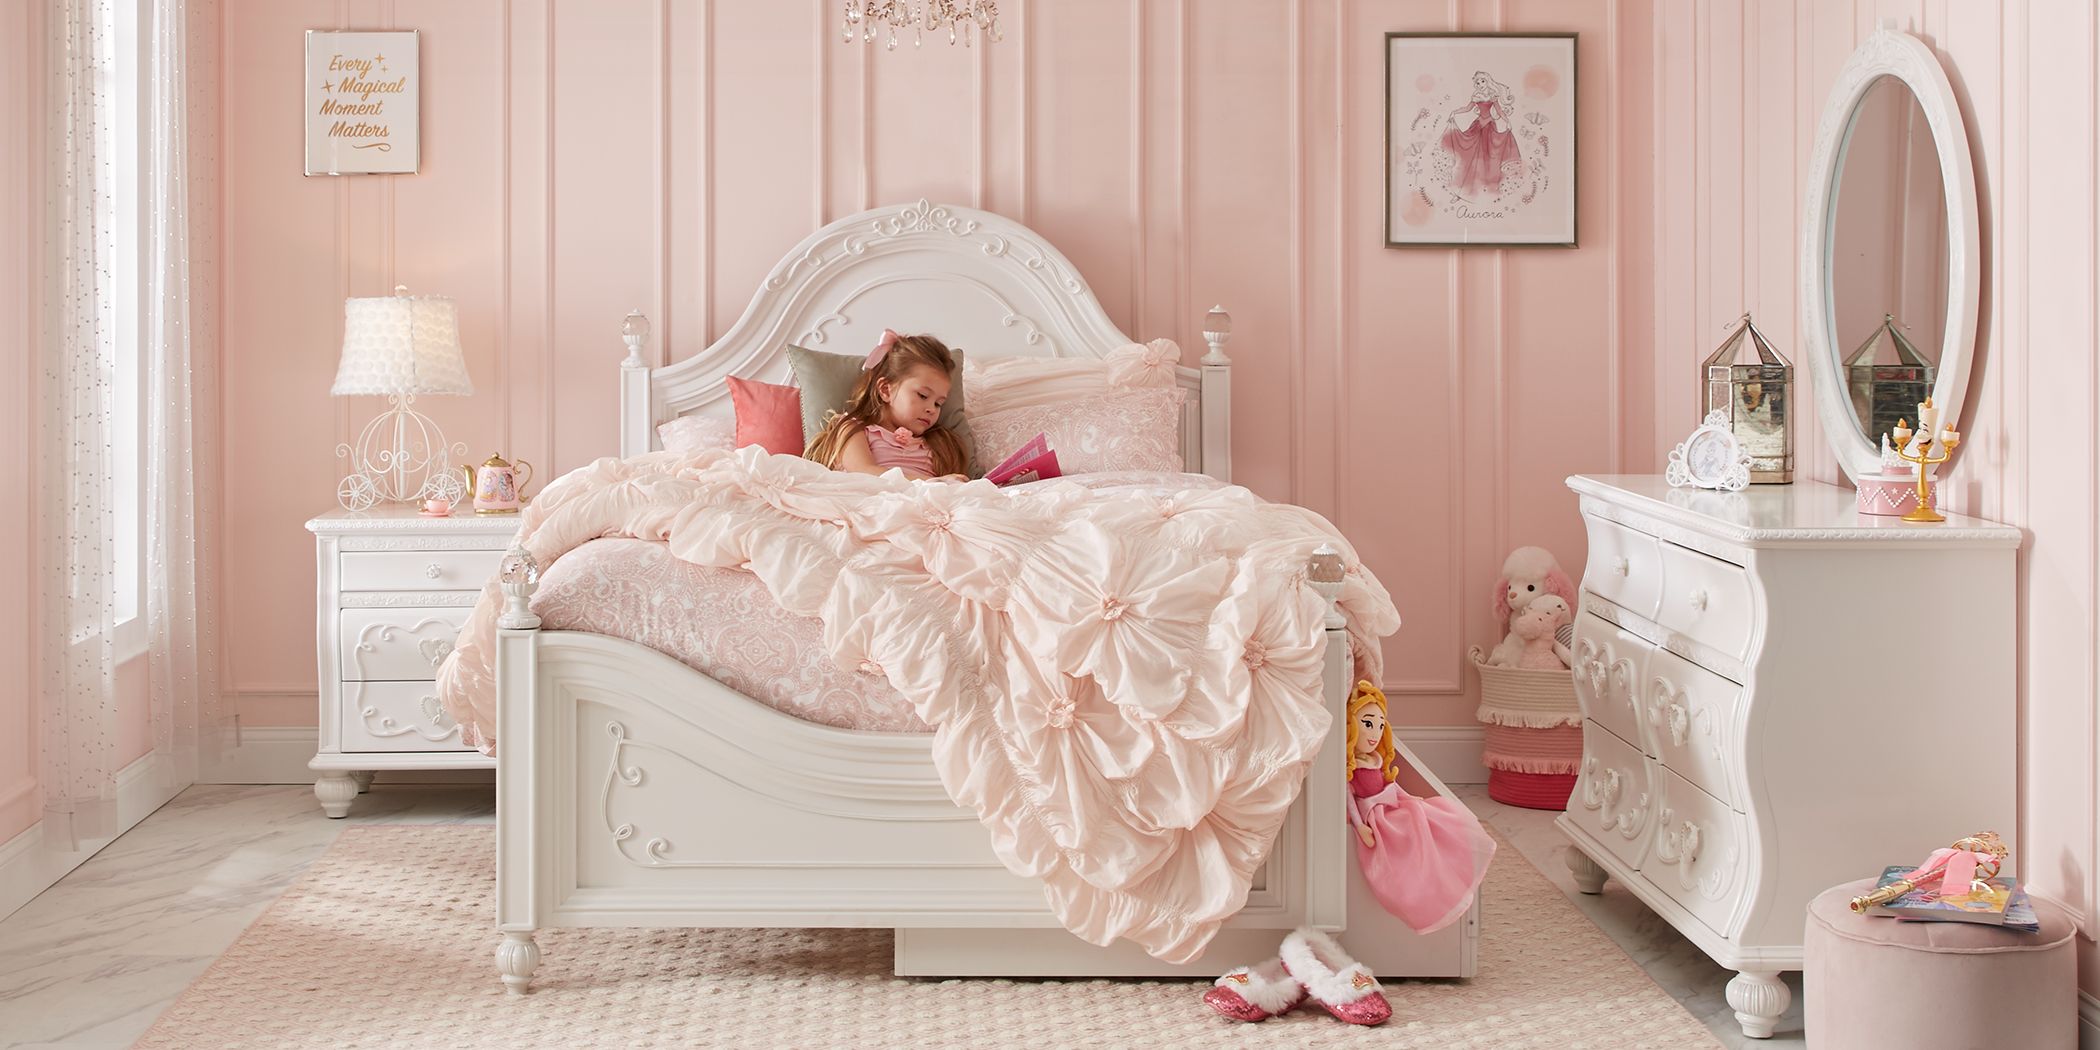 Disney Princess Bedroom Furniture, Disney Princess White Vanity Desk With Hutch